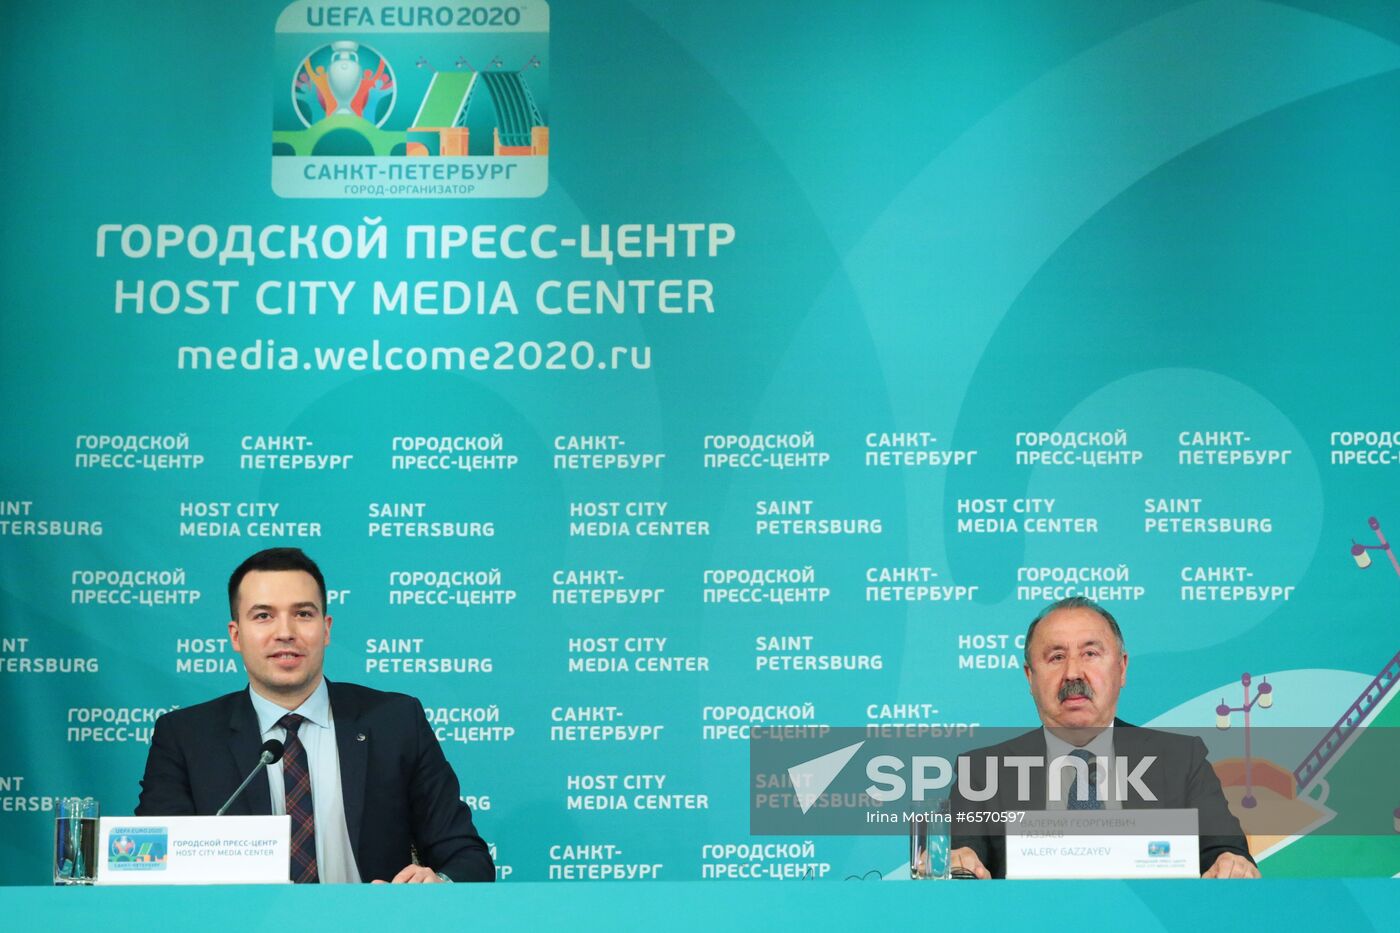 Host City Media Center in St. Petersburg